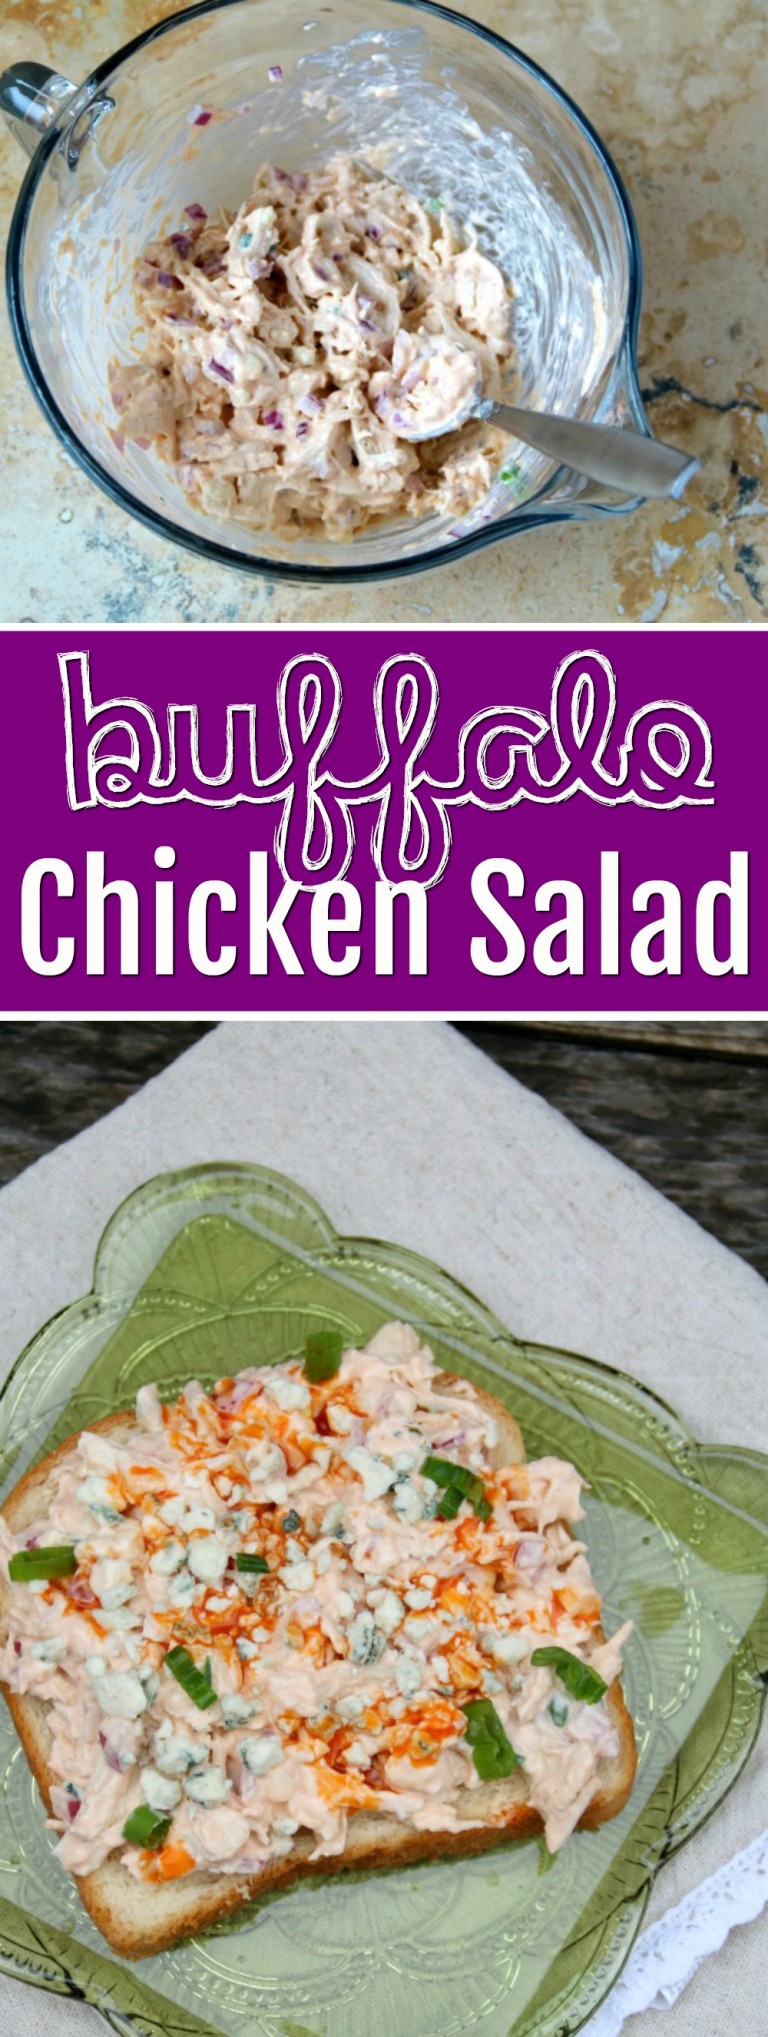 Buffalo Chicken Salad Recipe